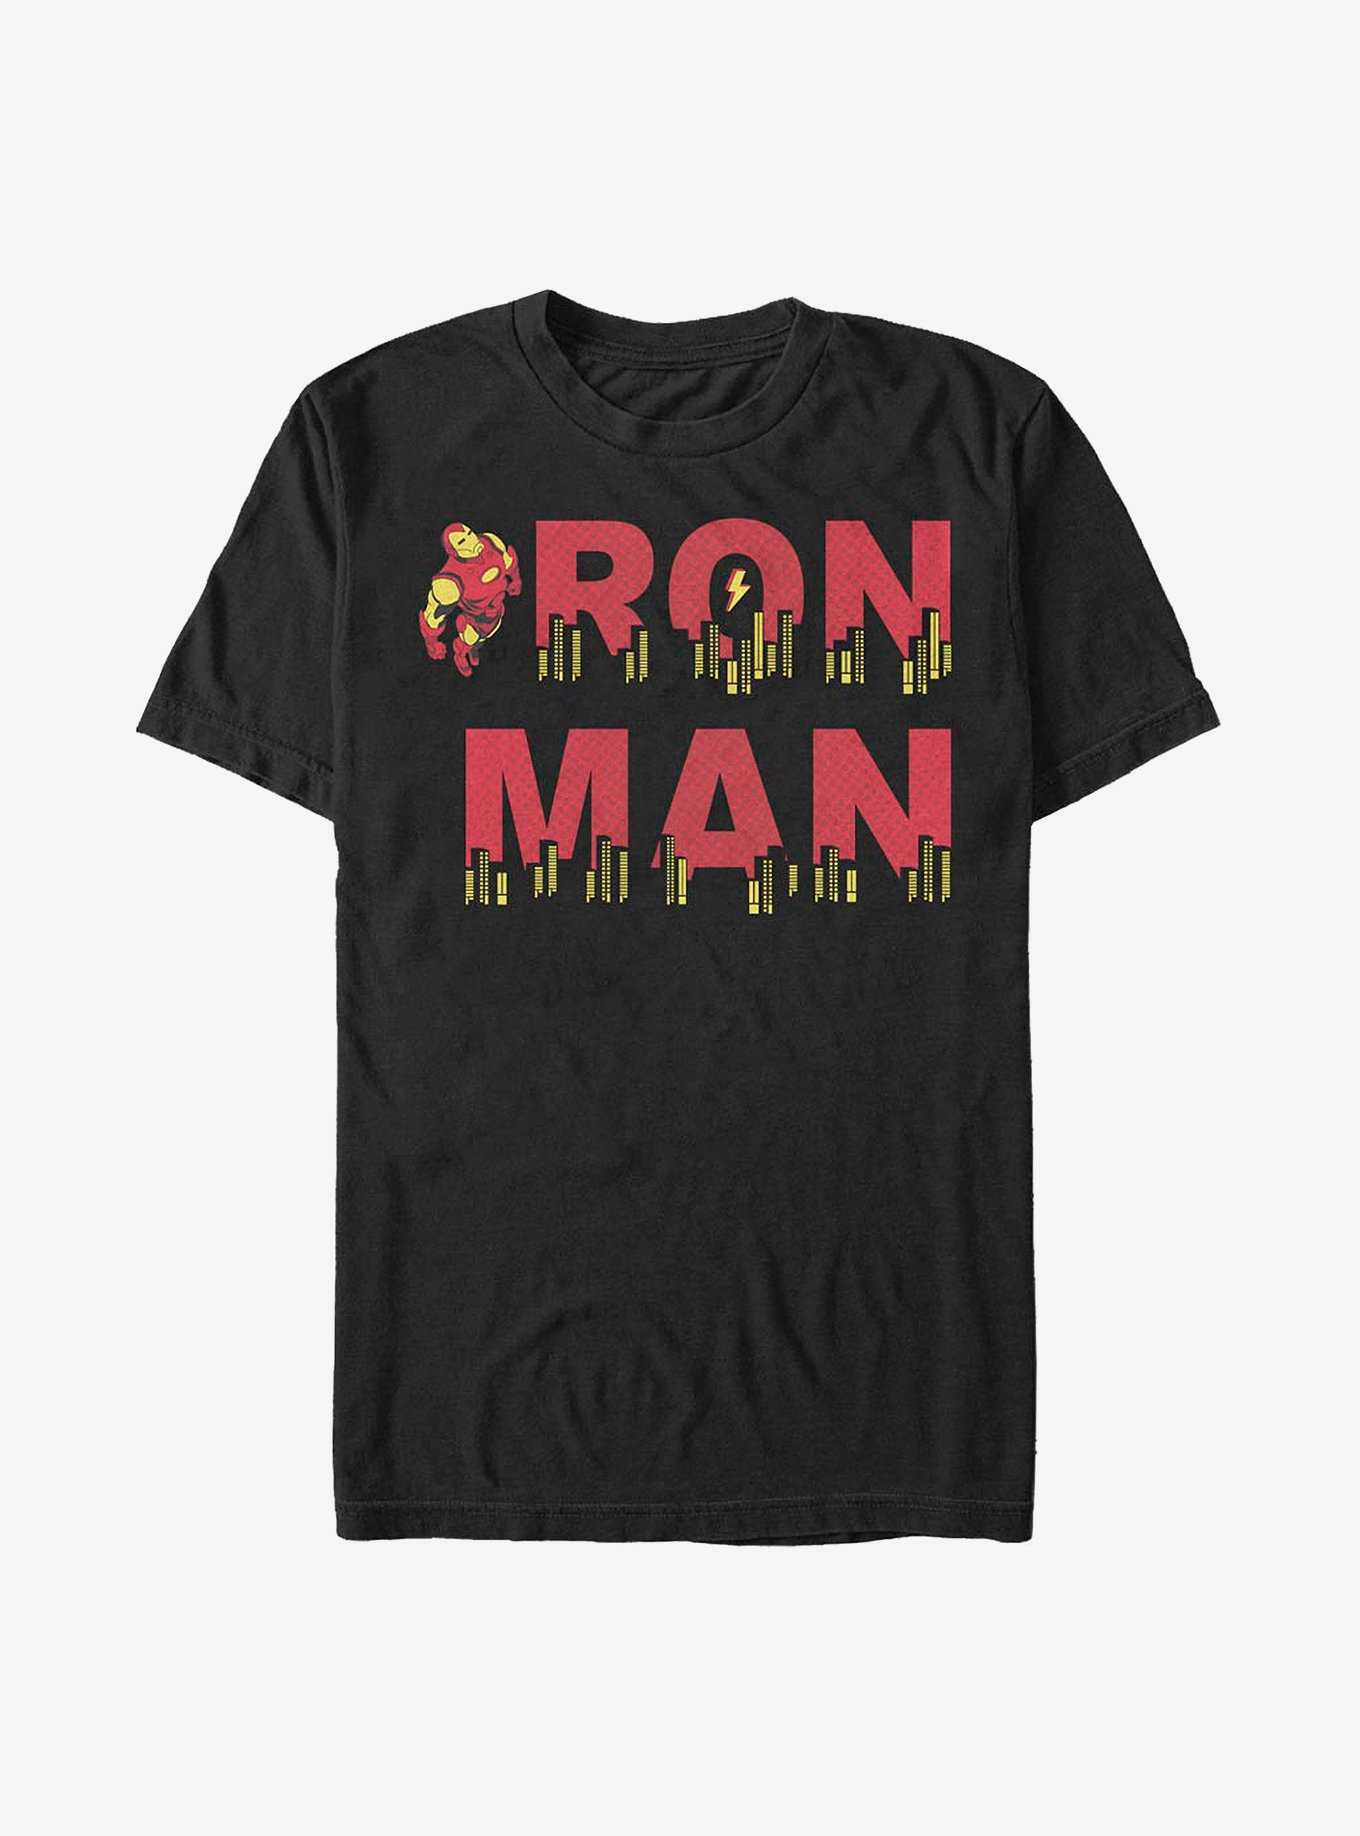 Marvel Iron Man Halftone Iron Man T-Shirt, , hi-res